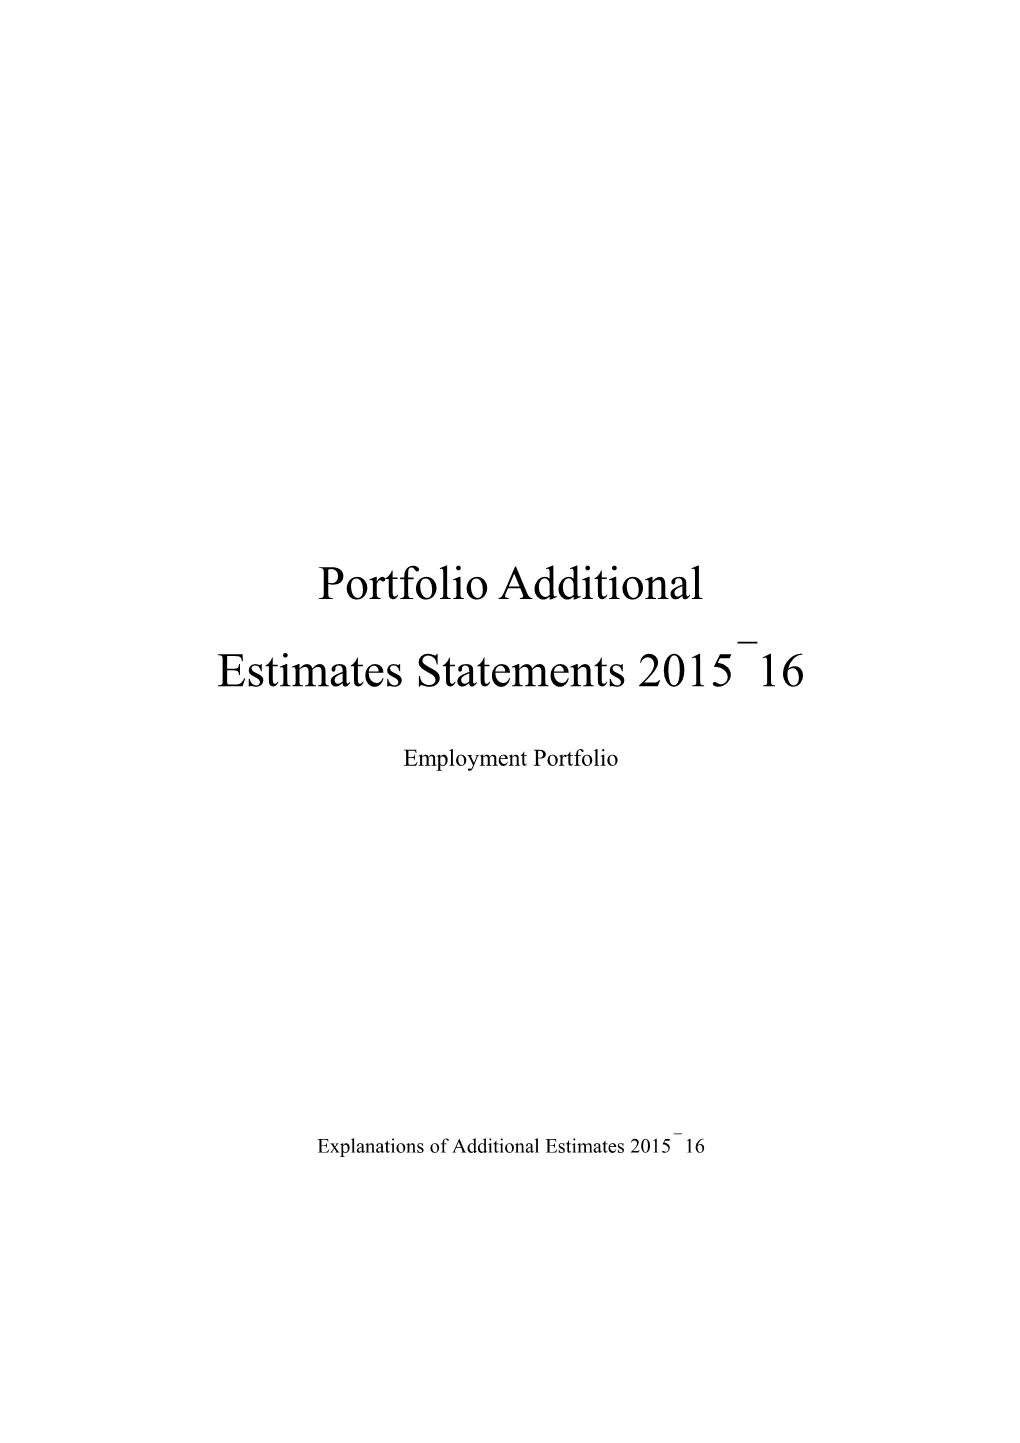 Portfolioadditional Estimates Statements 2015 16